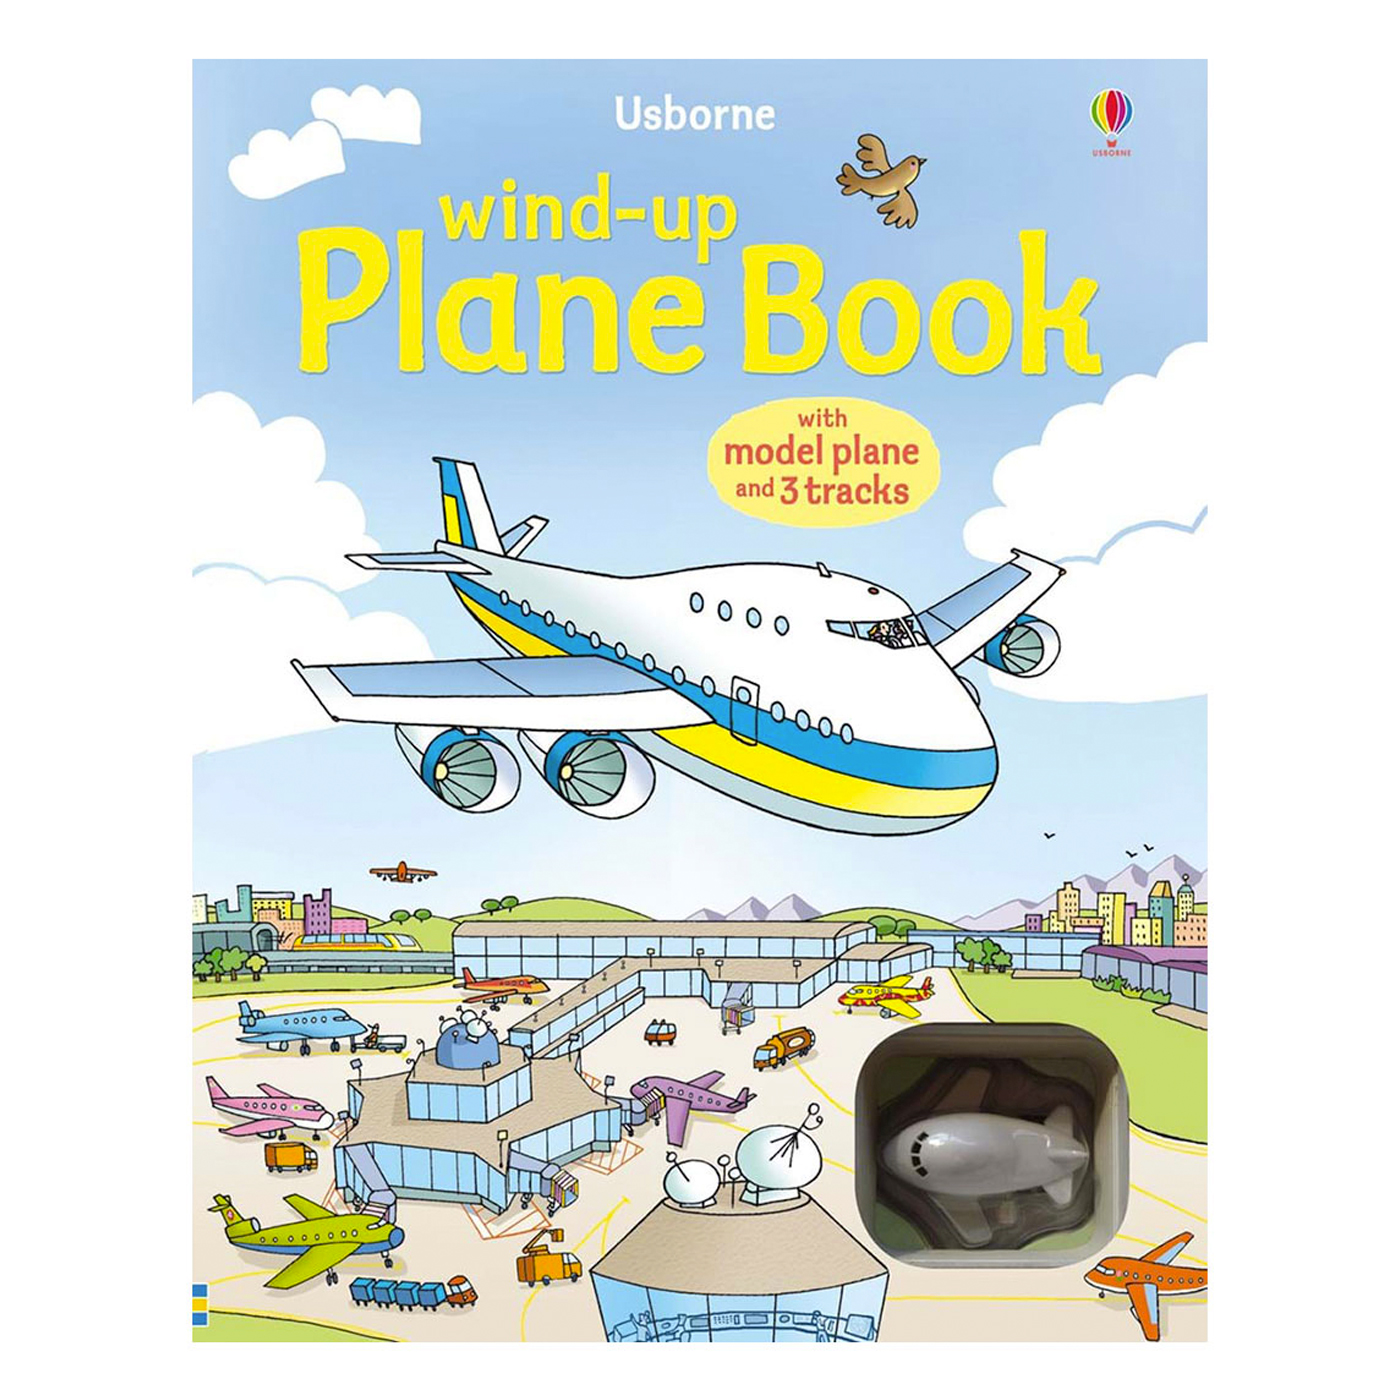  Wind-up Plane Book